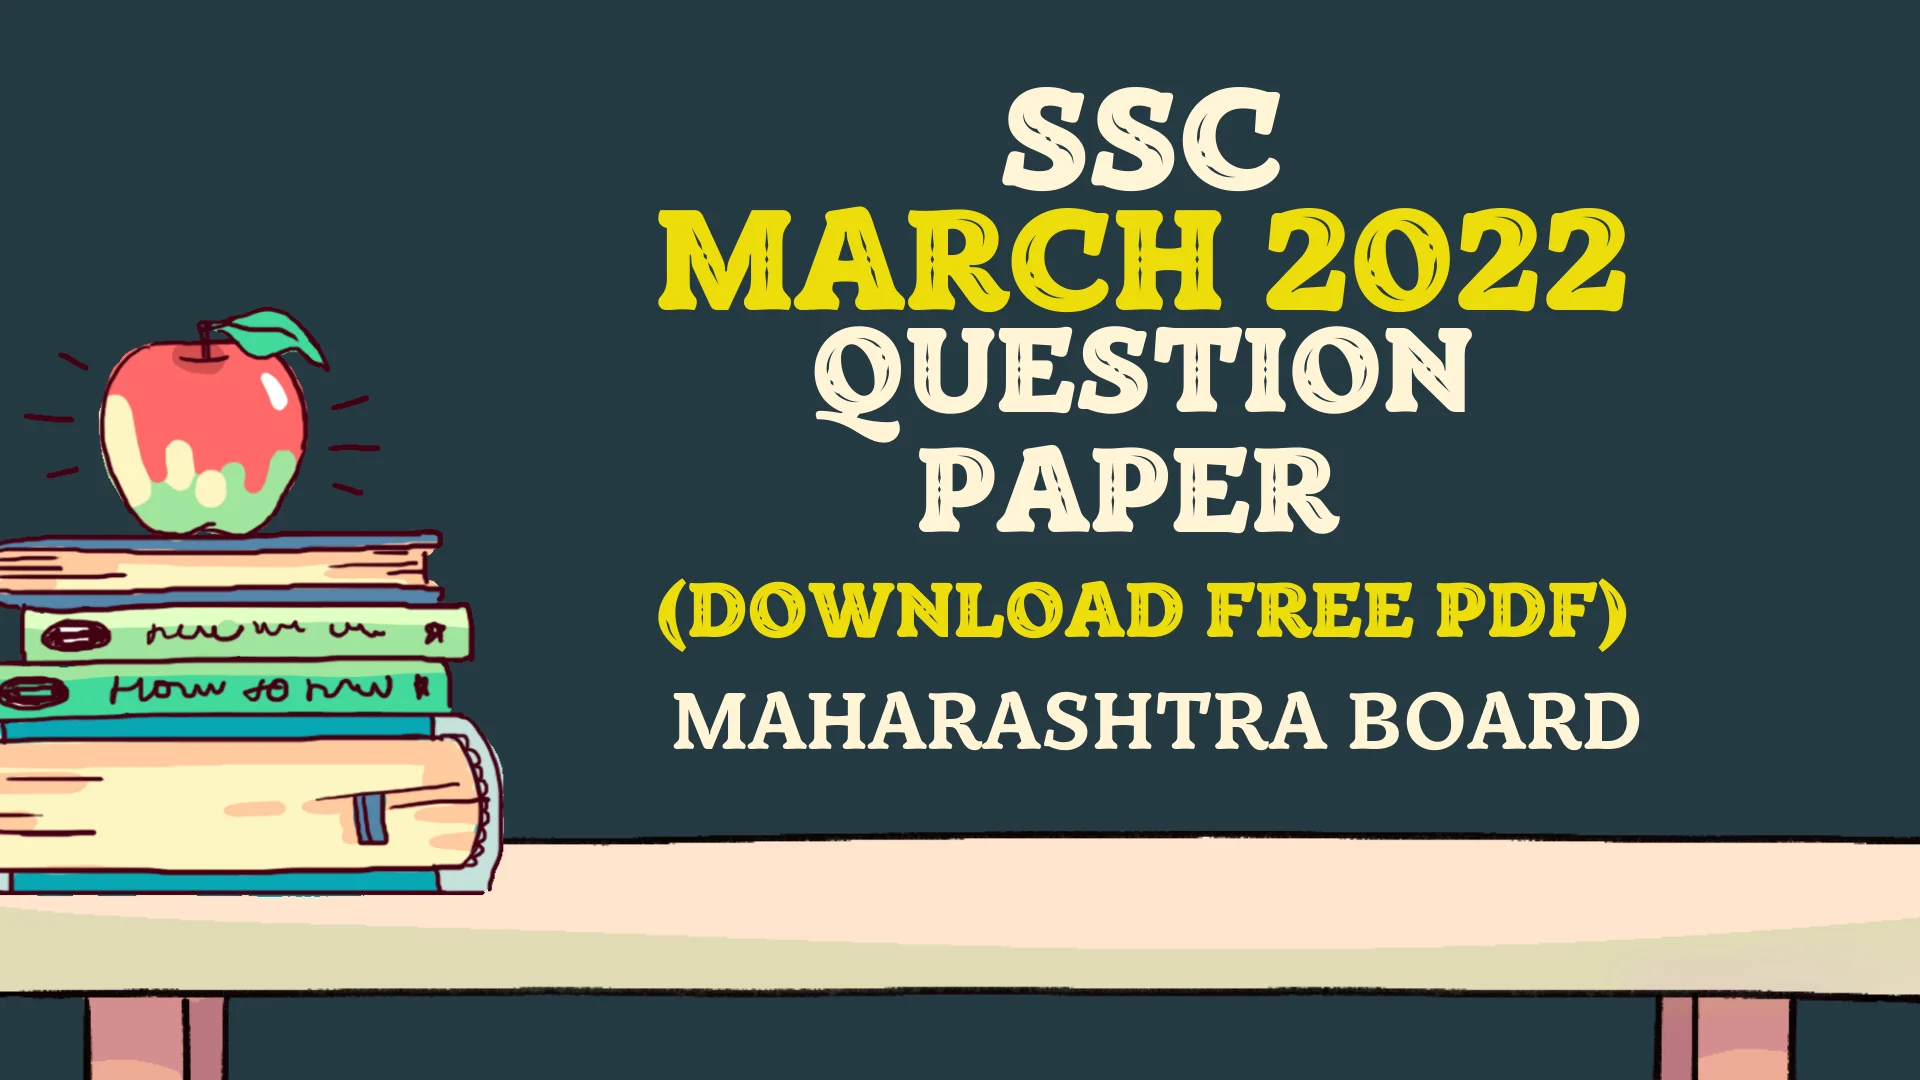 Ssc Board Exam 2022 Question Paper March Download Free Pdf Scholarszilla Scholarszilla 7862